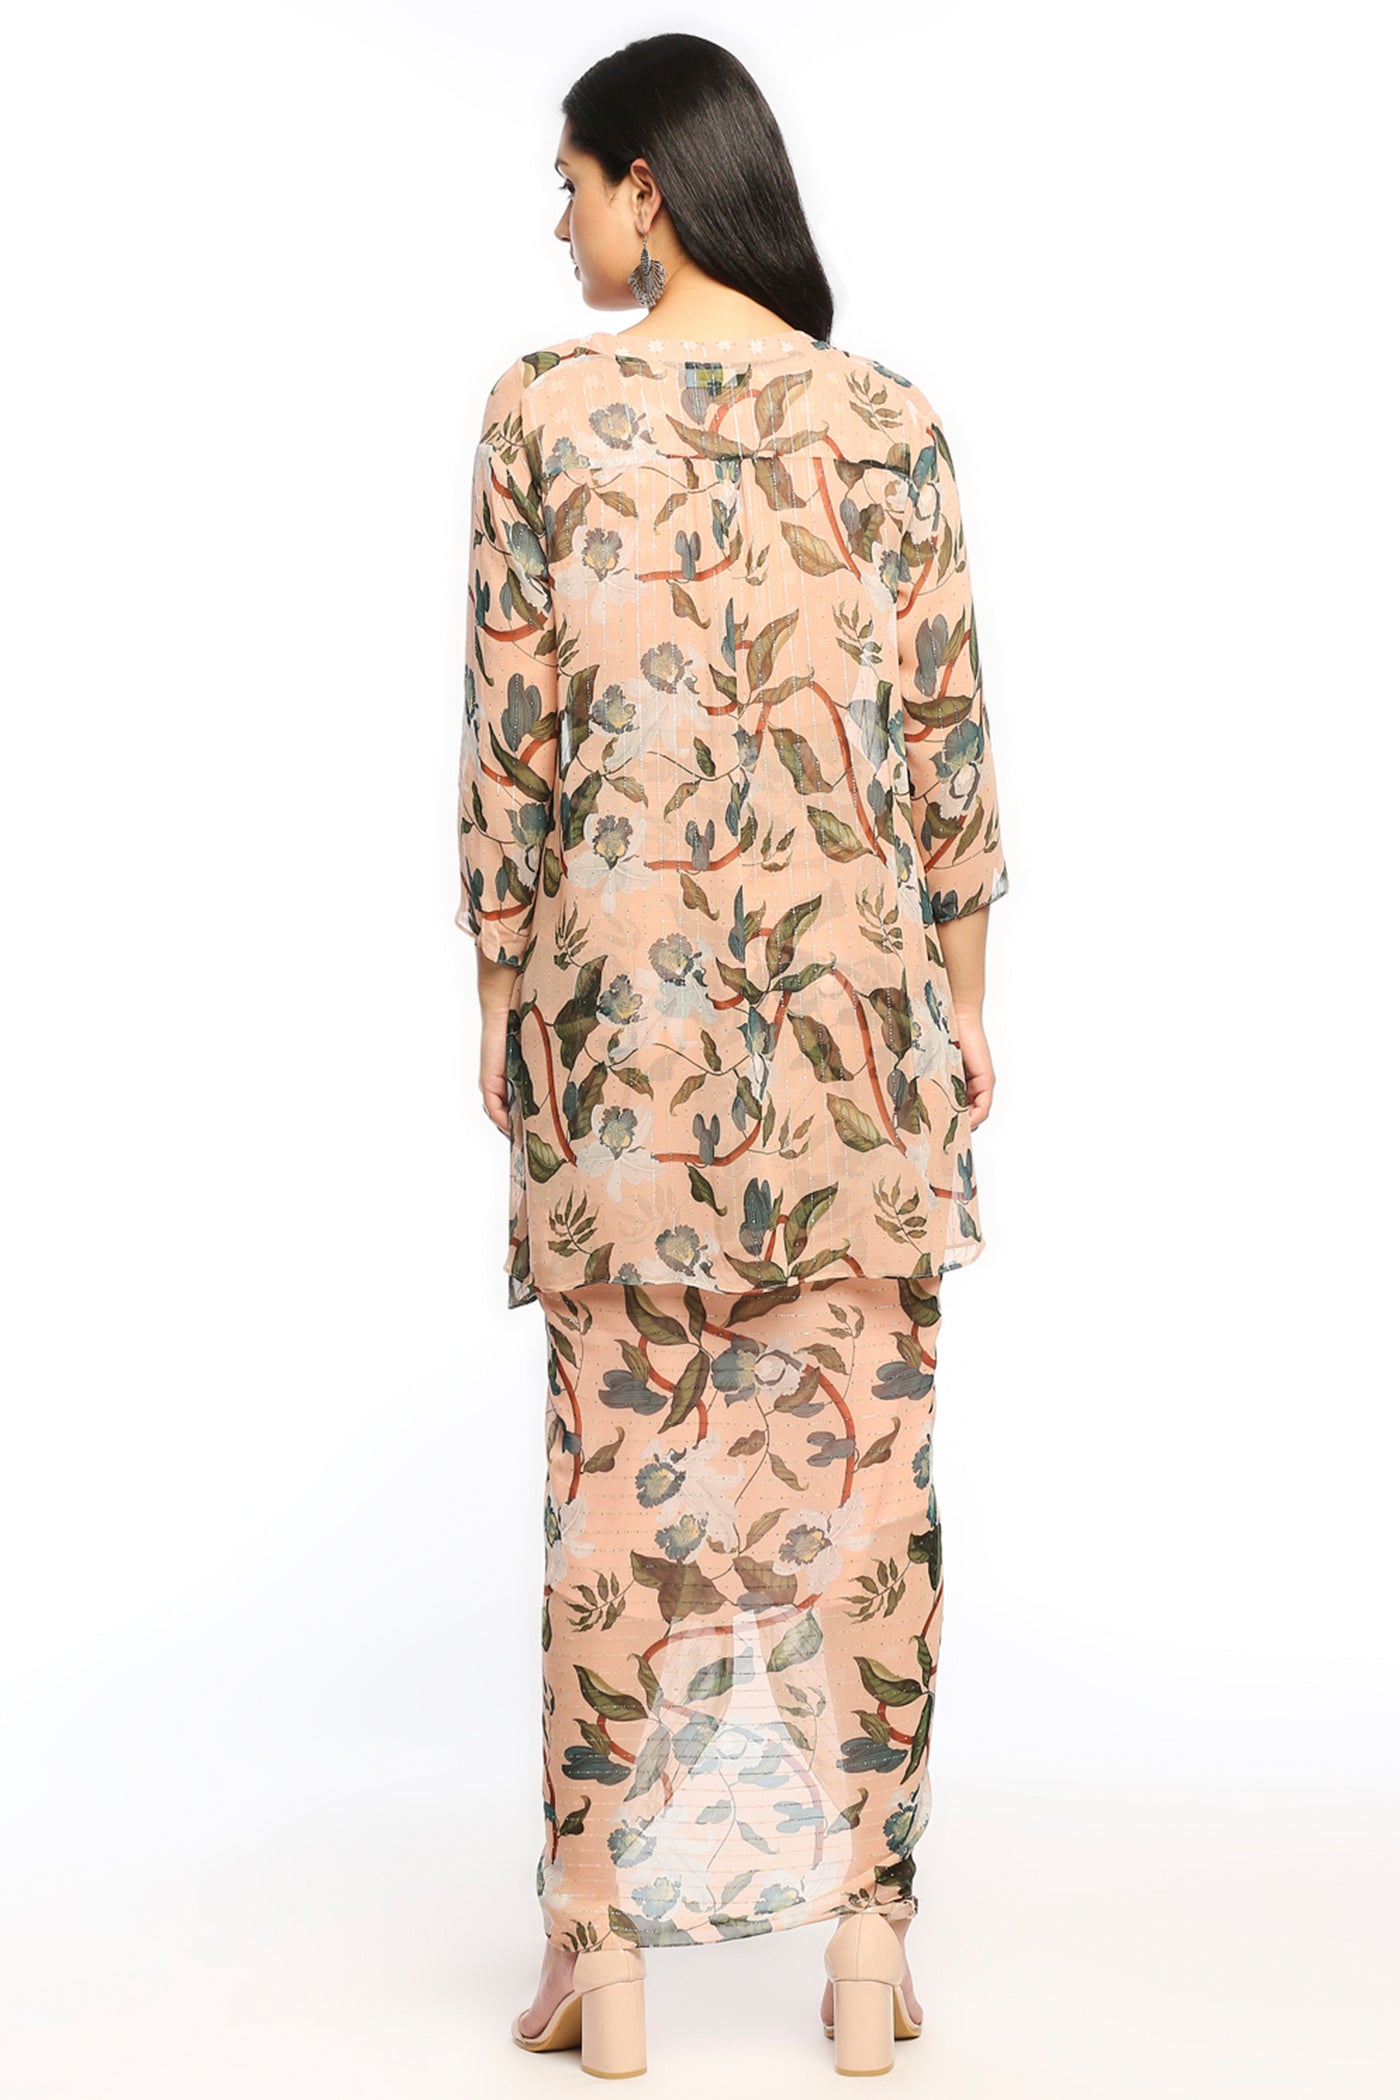 Sougat Paul Orchid Bloom Printed Drape Skirt Set With Jacket peach western indian designer wear online shopping melange singapore